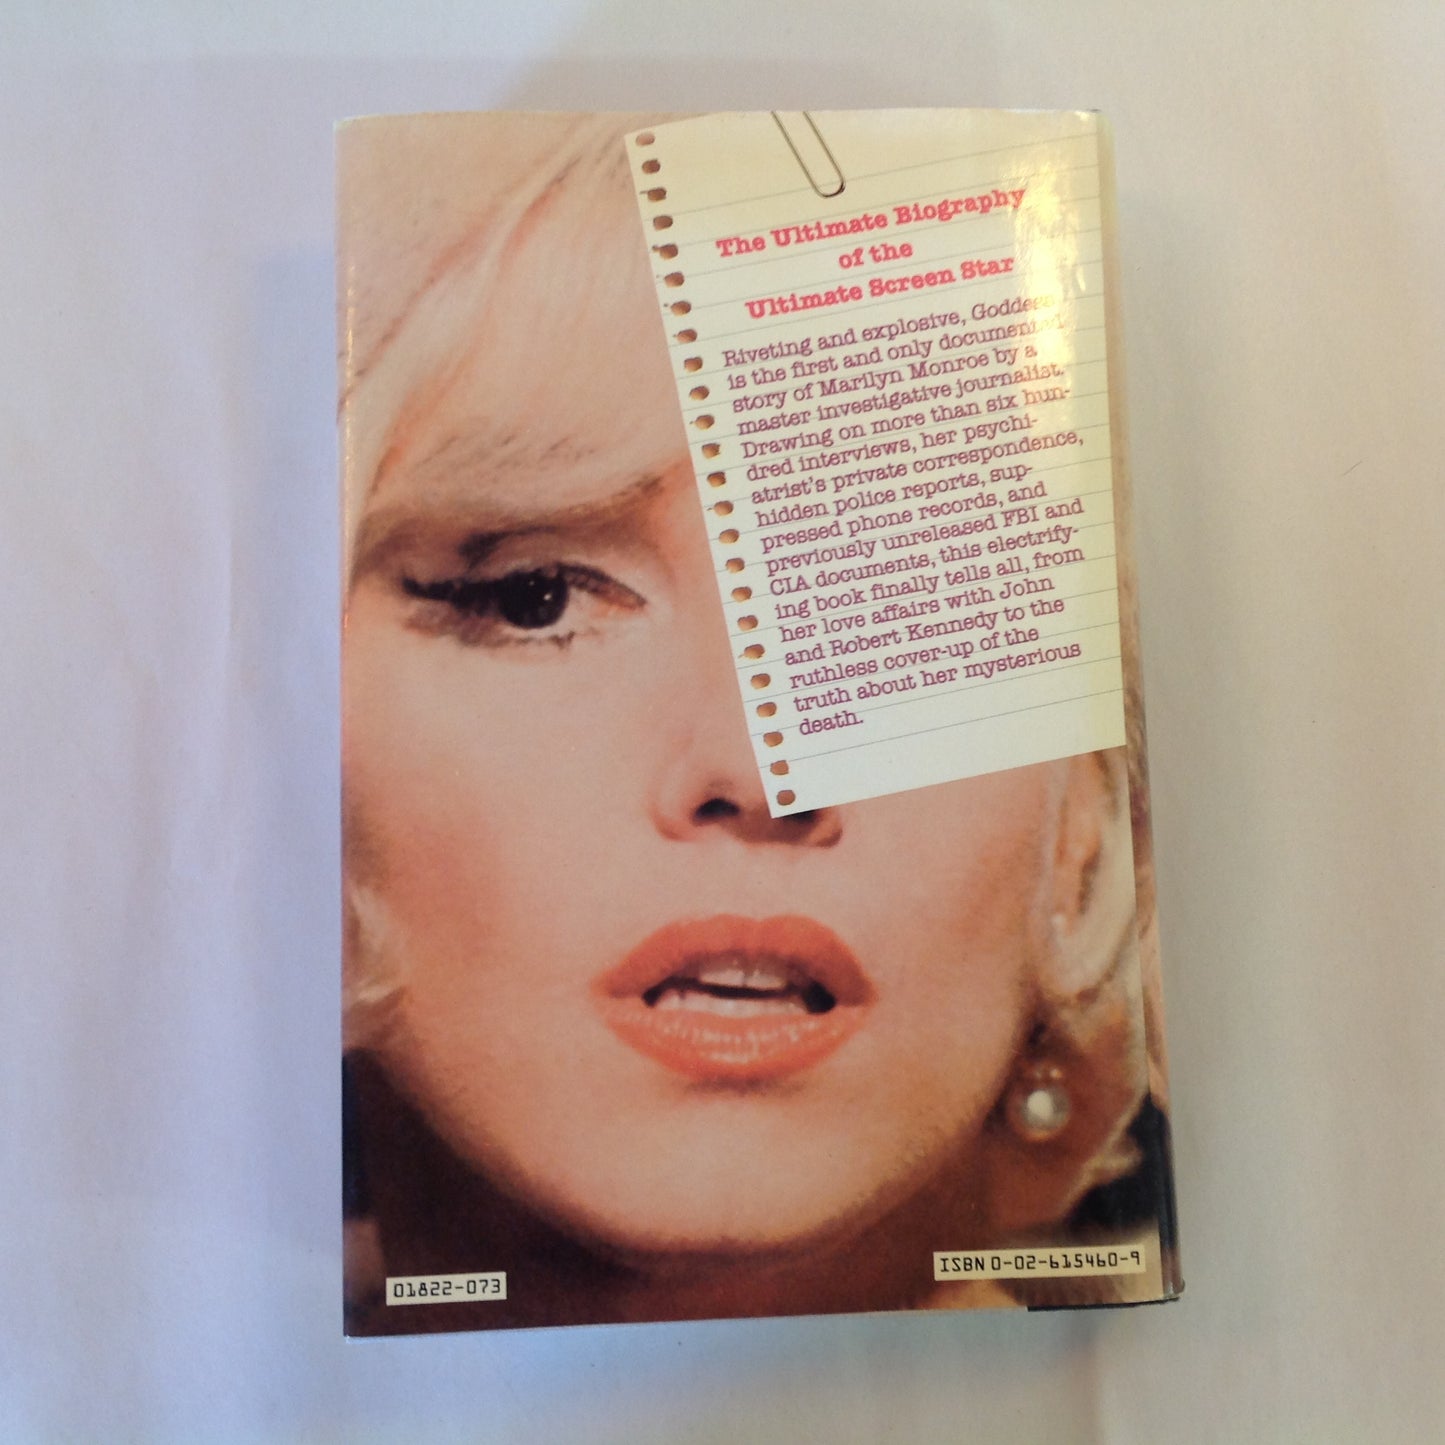 Vintage 1985 Hardcover Goddess: The Secret Lives of Marilyn Monroe Anthony Summers